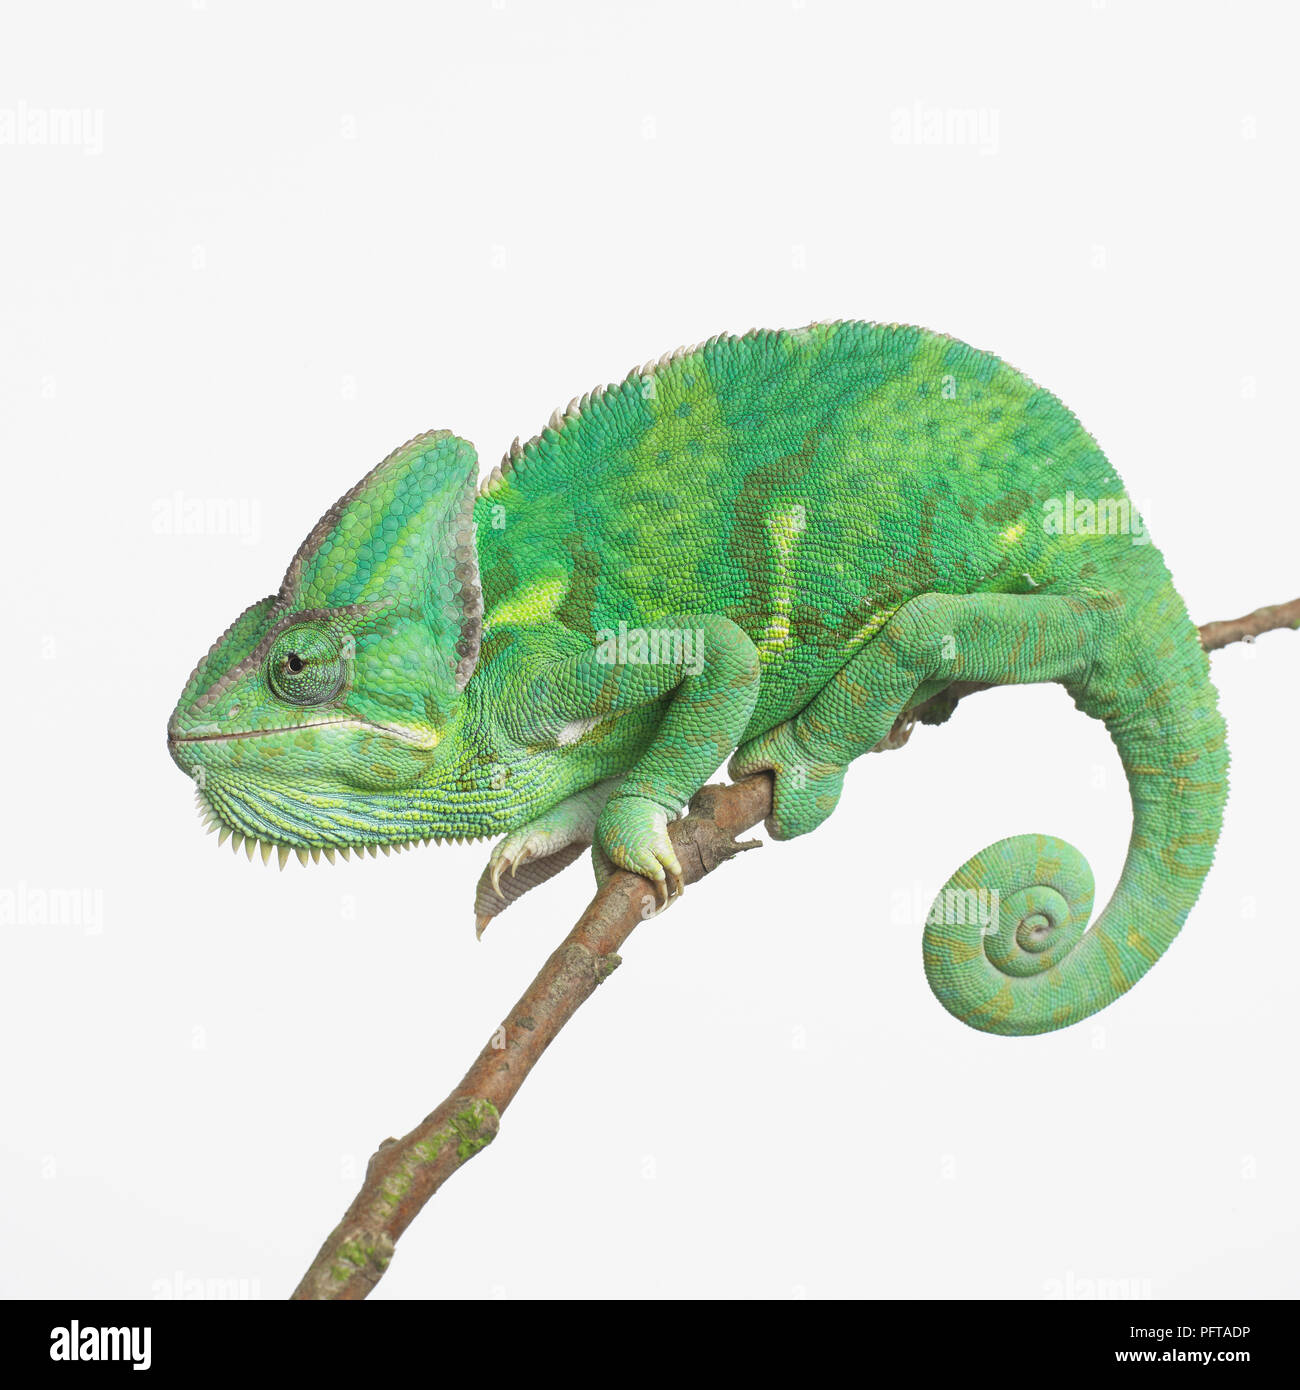 Yemen Chameleon, Veiled Chameleon (Chamaeleo calyptratus) Stock Photo